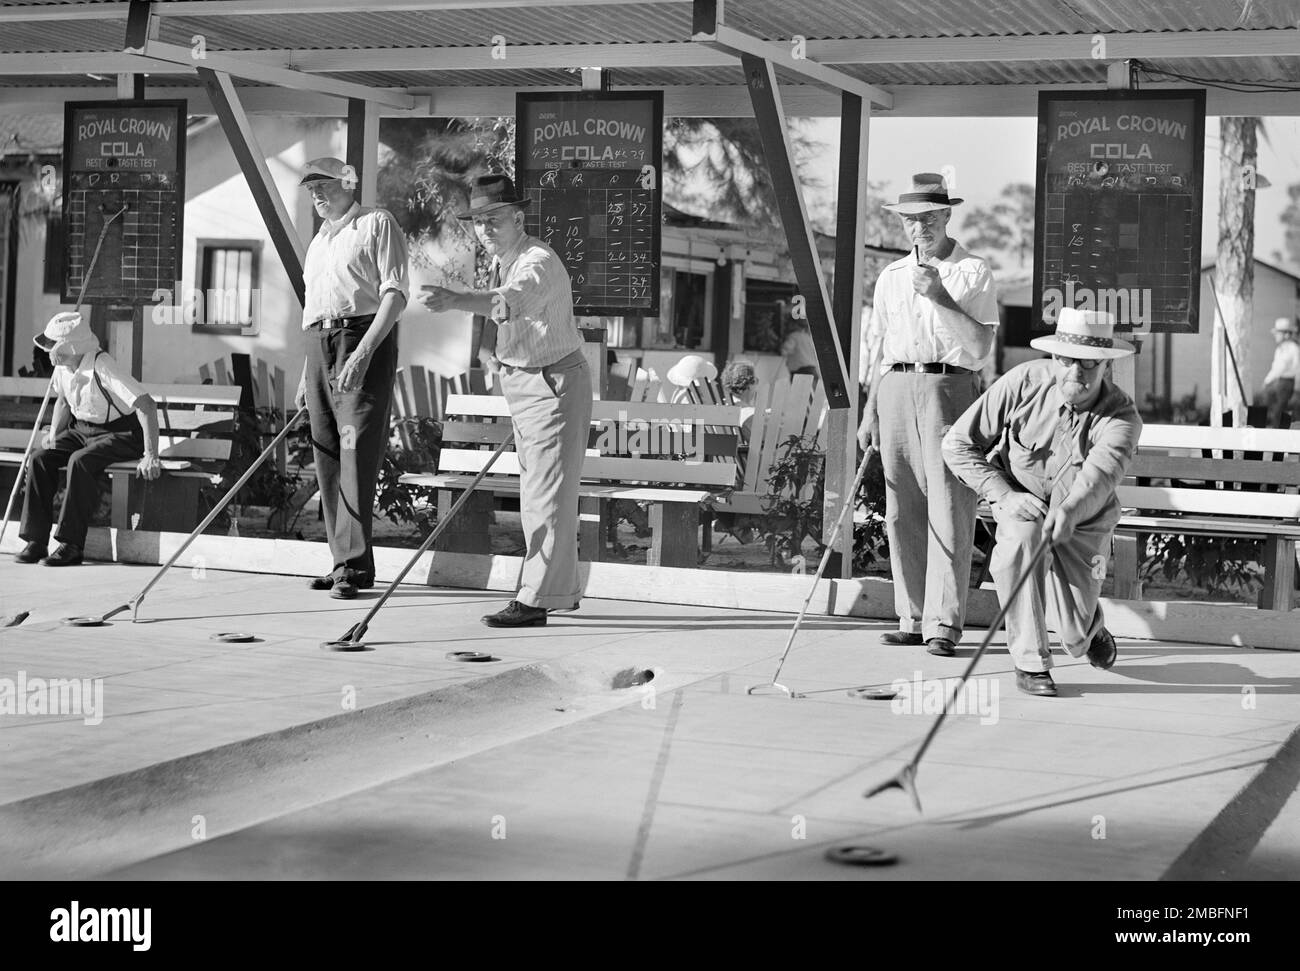 Group of Men Playing Shuffleboard, Sarasota Trailer Park, Sarasota, Florida, USA, Marion Post Wolcott, U.S. Farm Security Administration, January 1941 Stock Photo